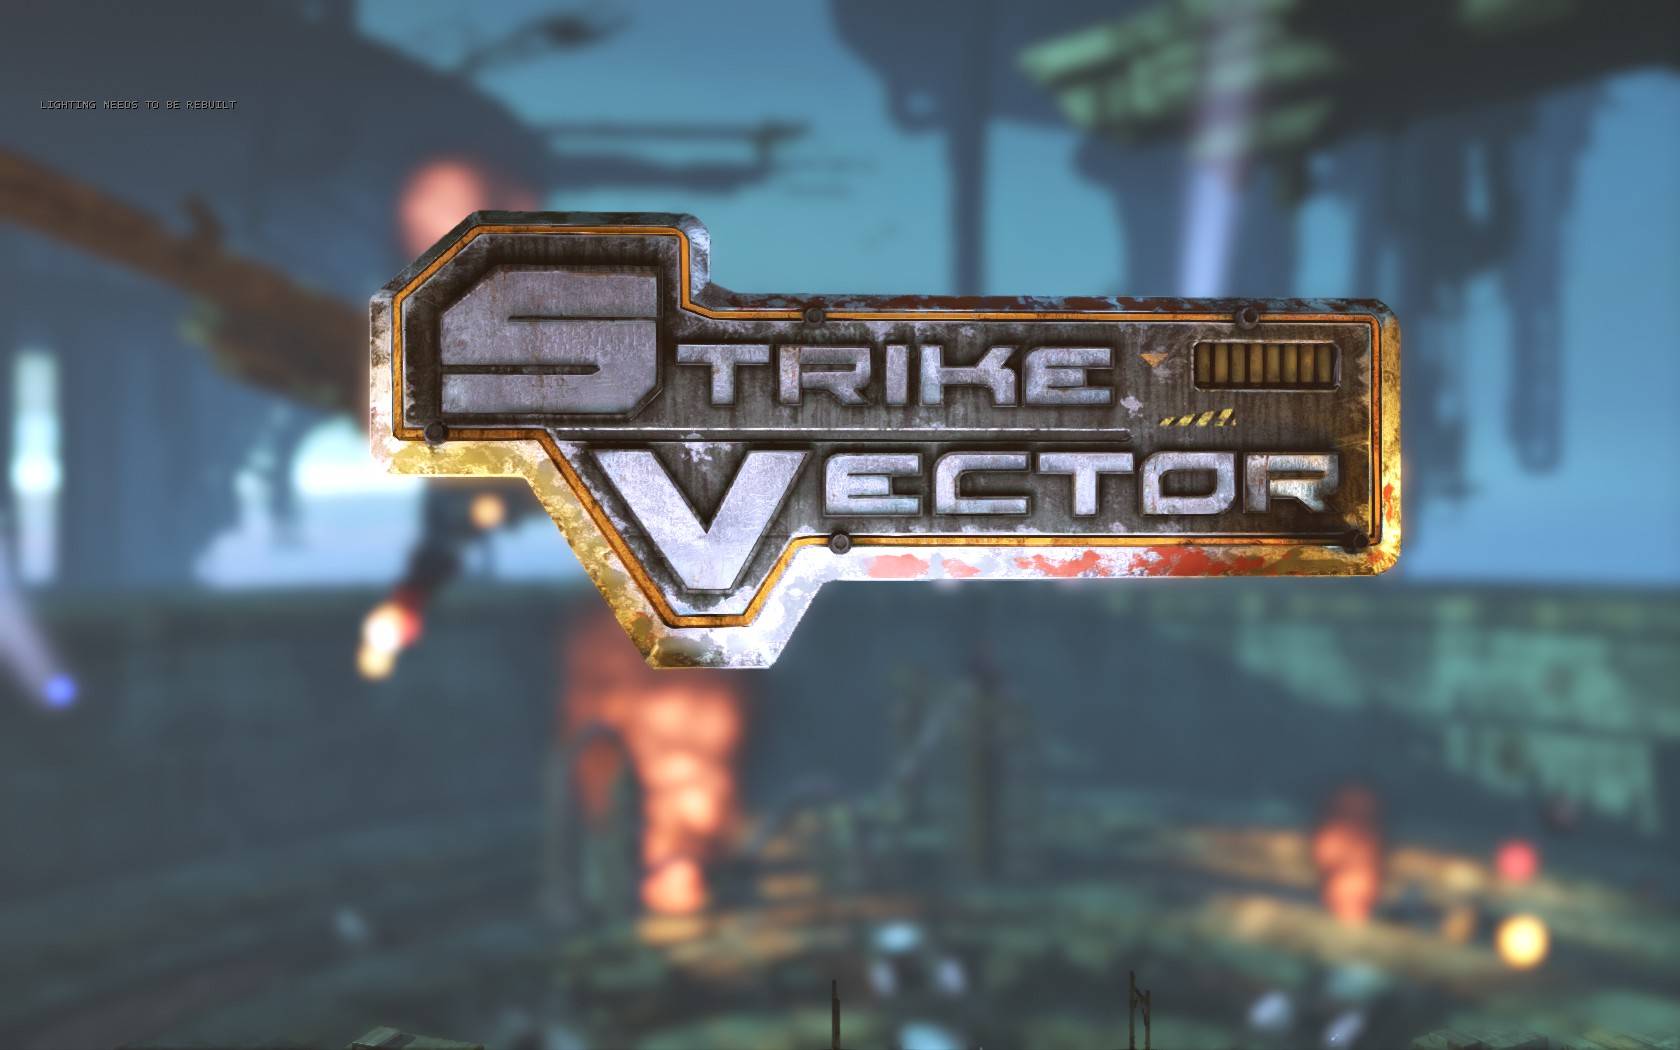 Strike vector steam фото 17